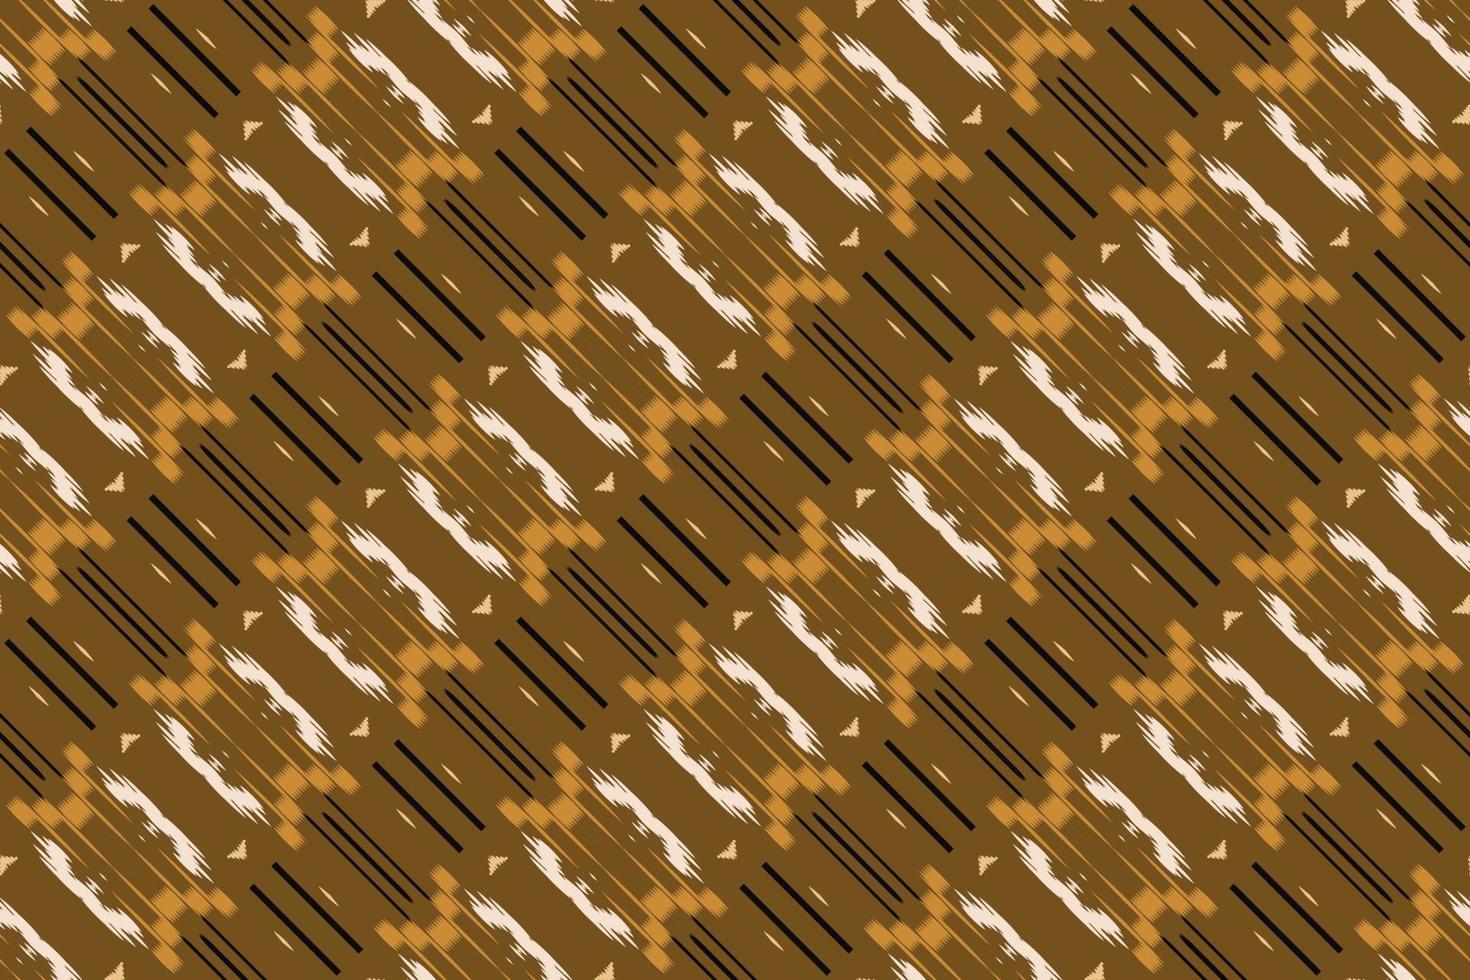 ikat puntos fondos tribales de patrones sin fisuras. étnico geométrico ikkat batik vector digital diseño textil para estampados tela sari mughal cepillo símbolo franjas textura kurti kurtis kurtas